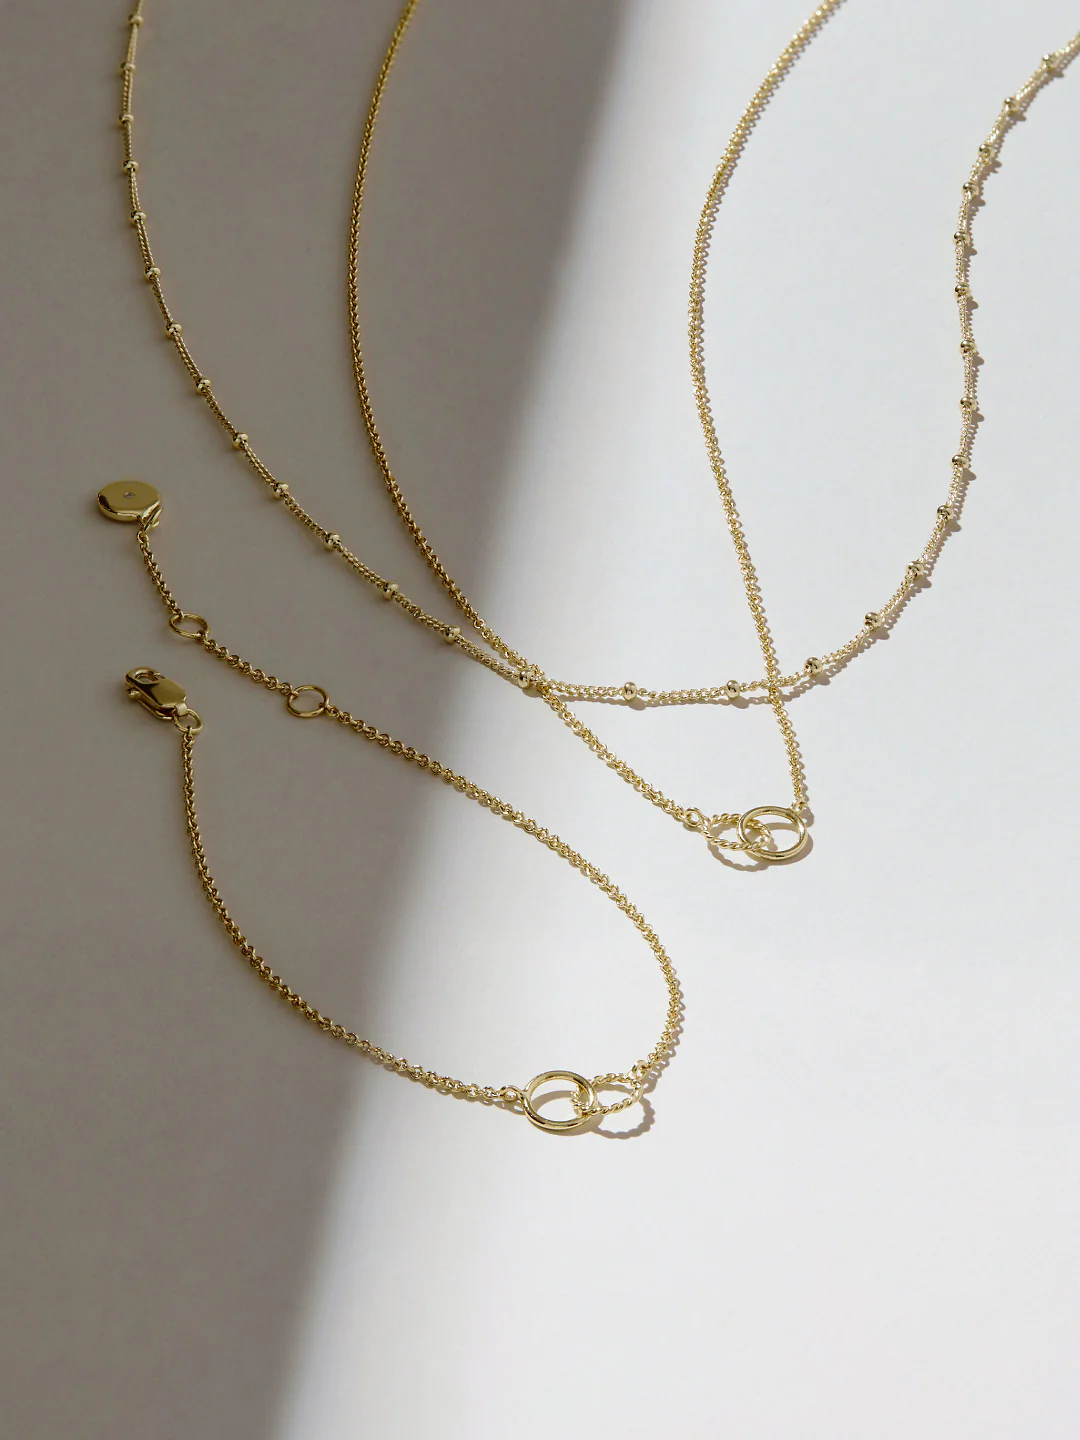 Swarish Jewels Delicate Layers Bundle Necklace Set of 3